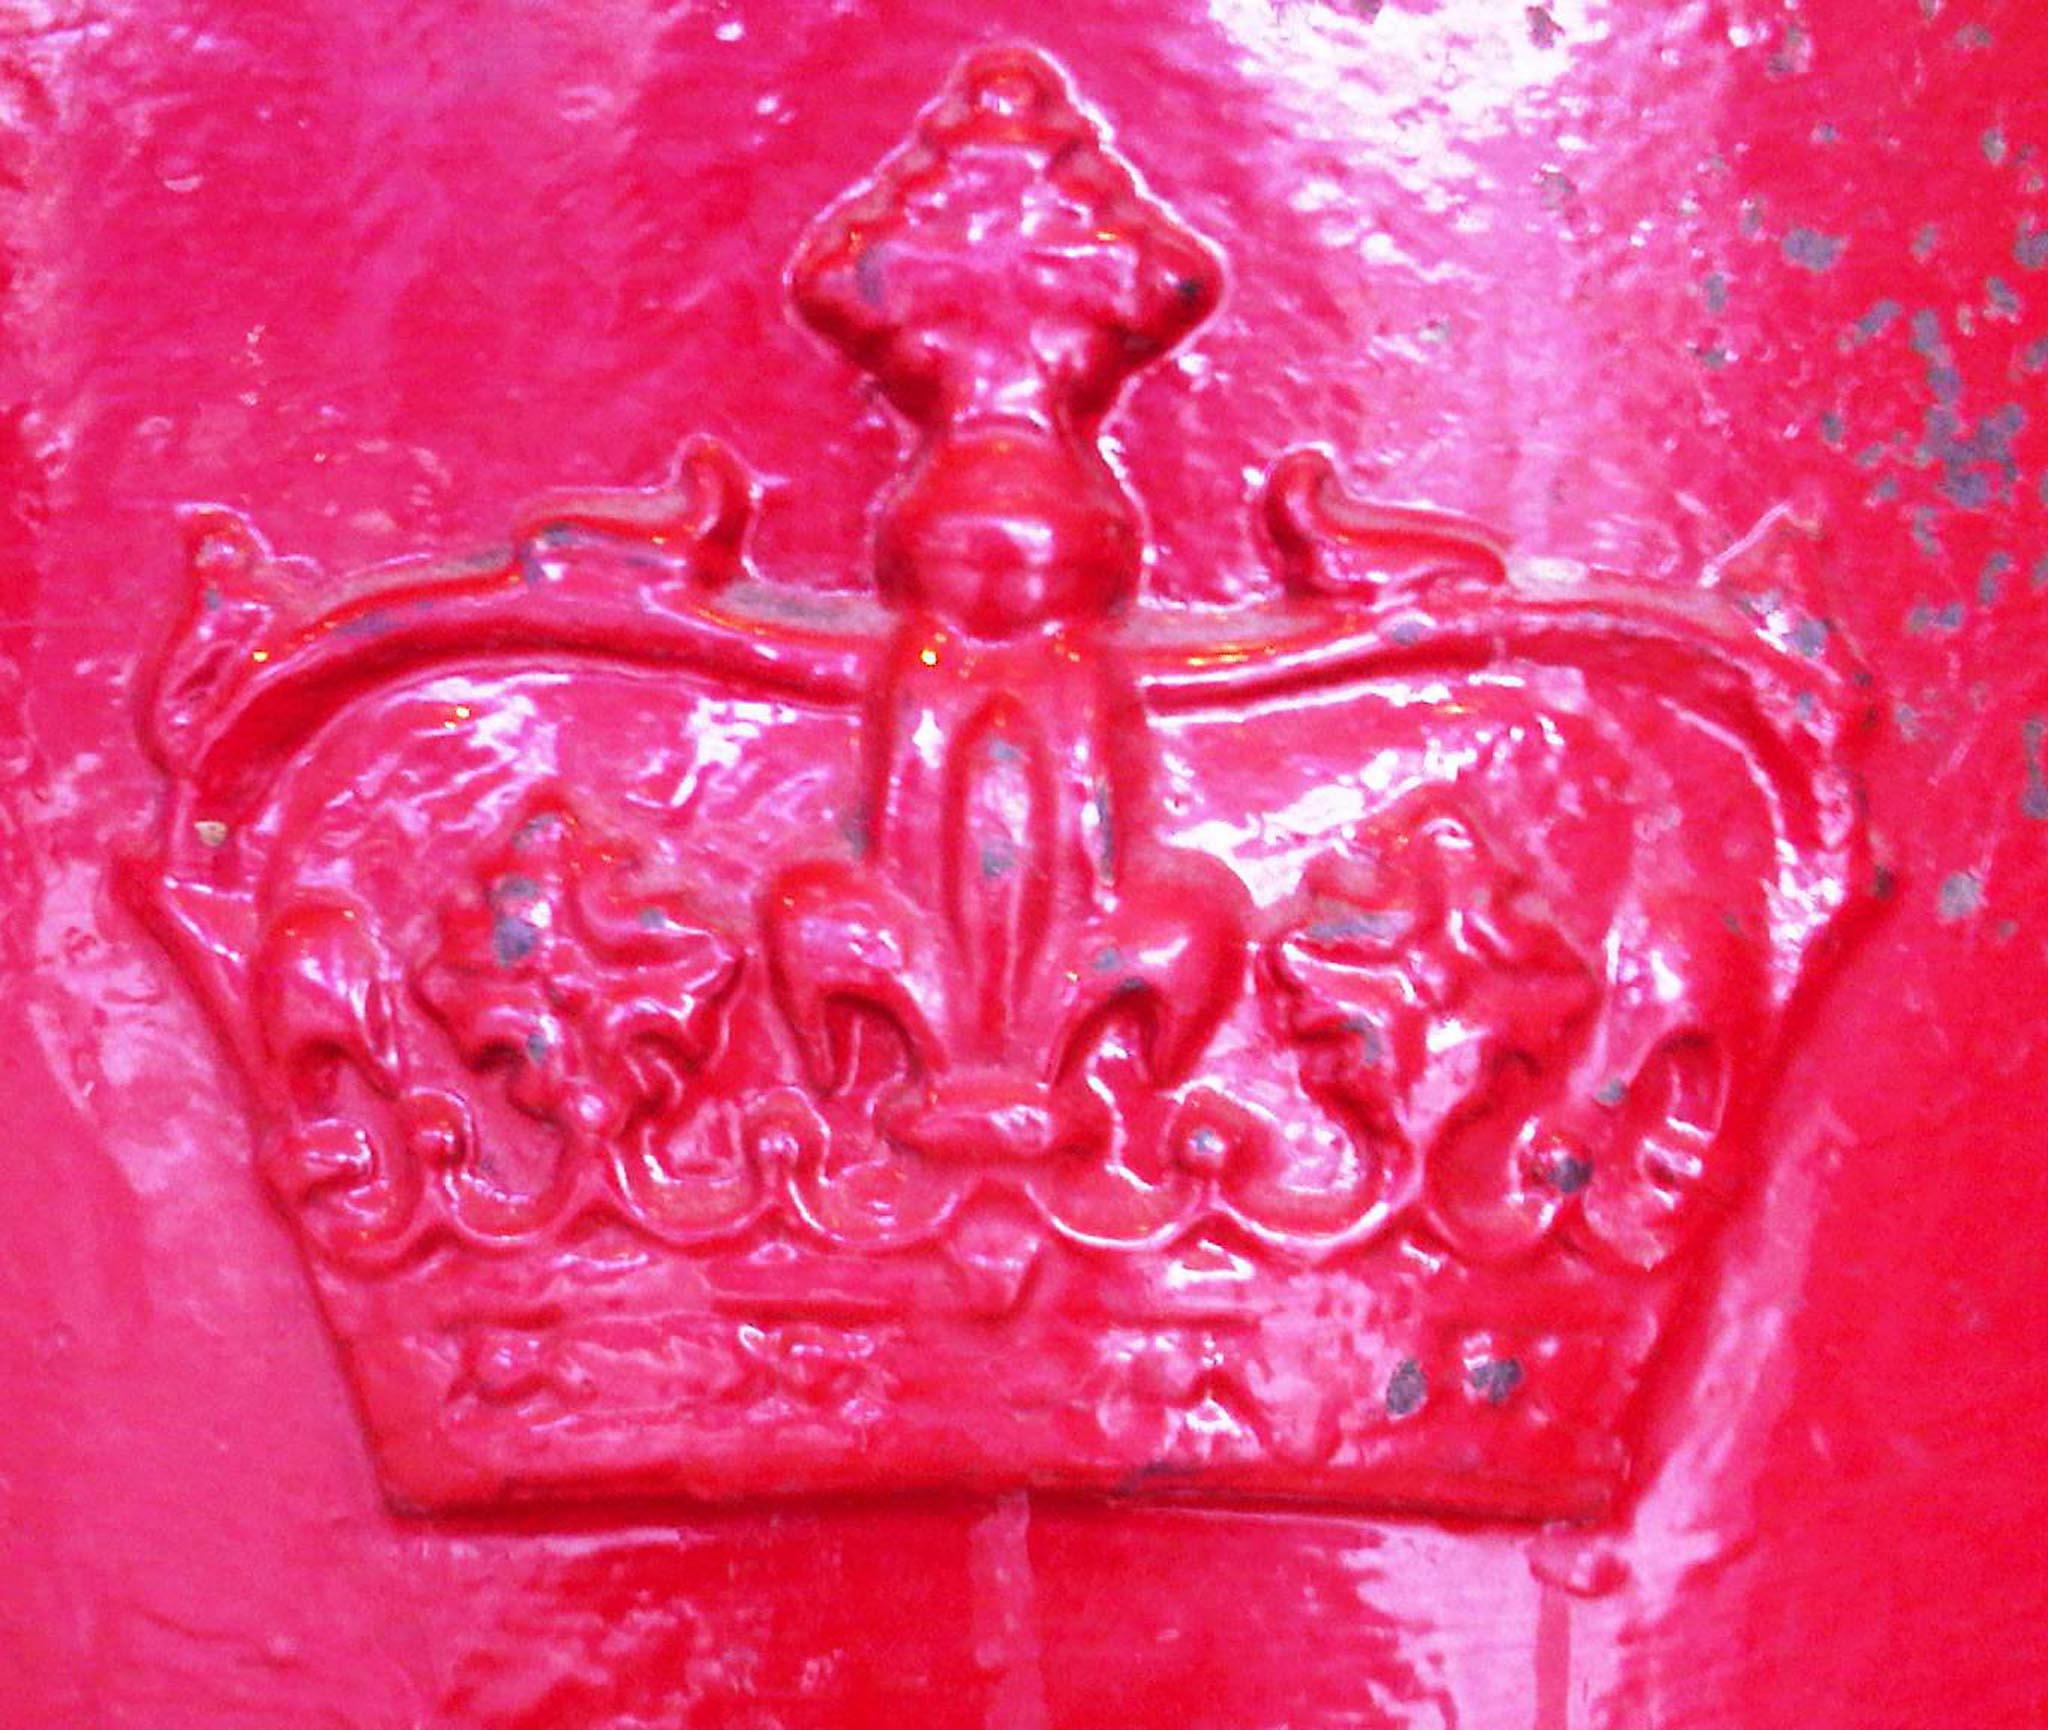 ER Scottish crown pillar box cipher. Robert Cole